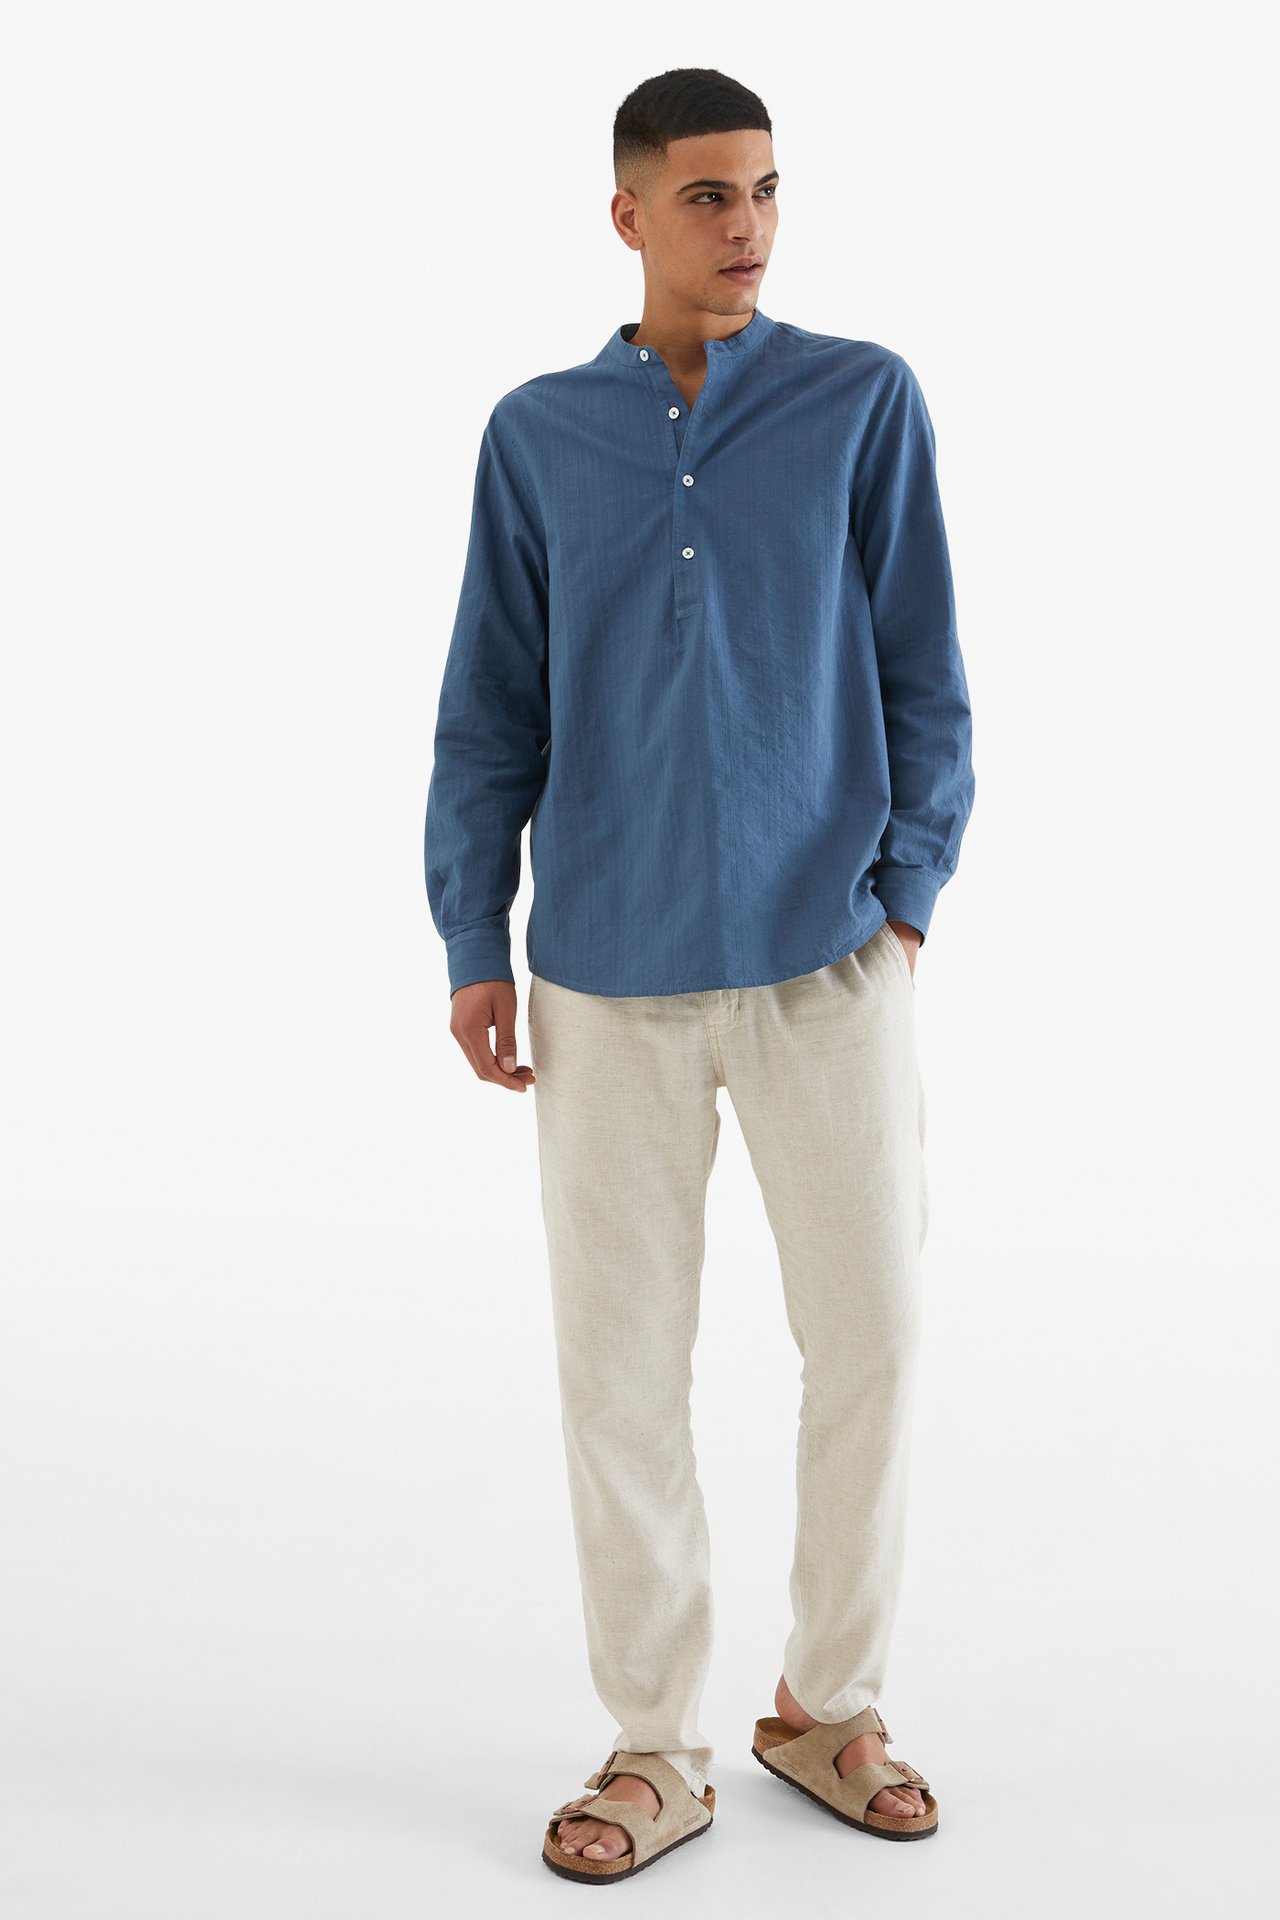 Skjorta med murarkrage - Mörkblå - 189cm / Storlek: M - 2